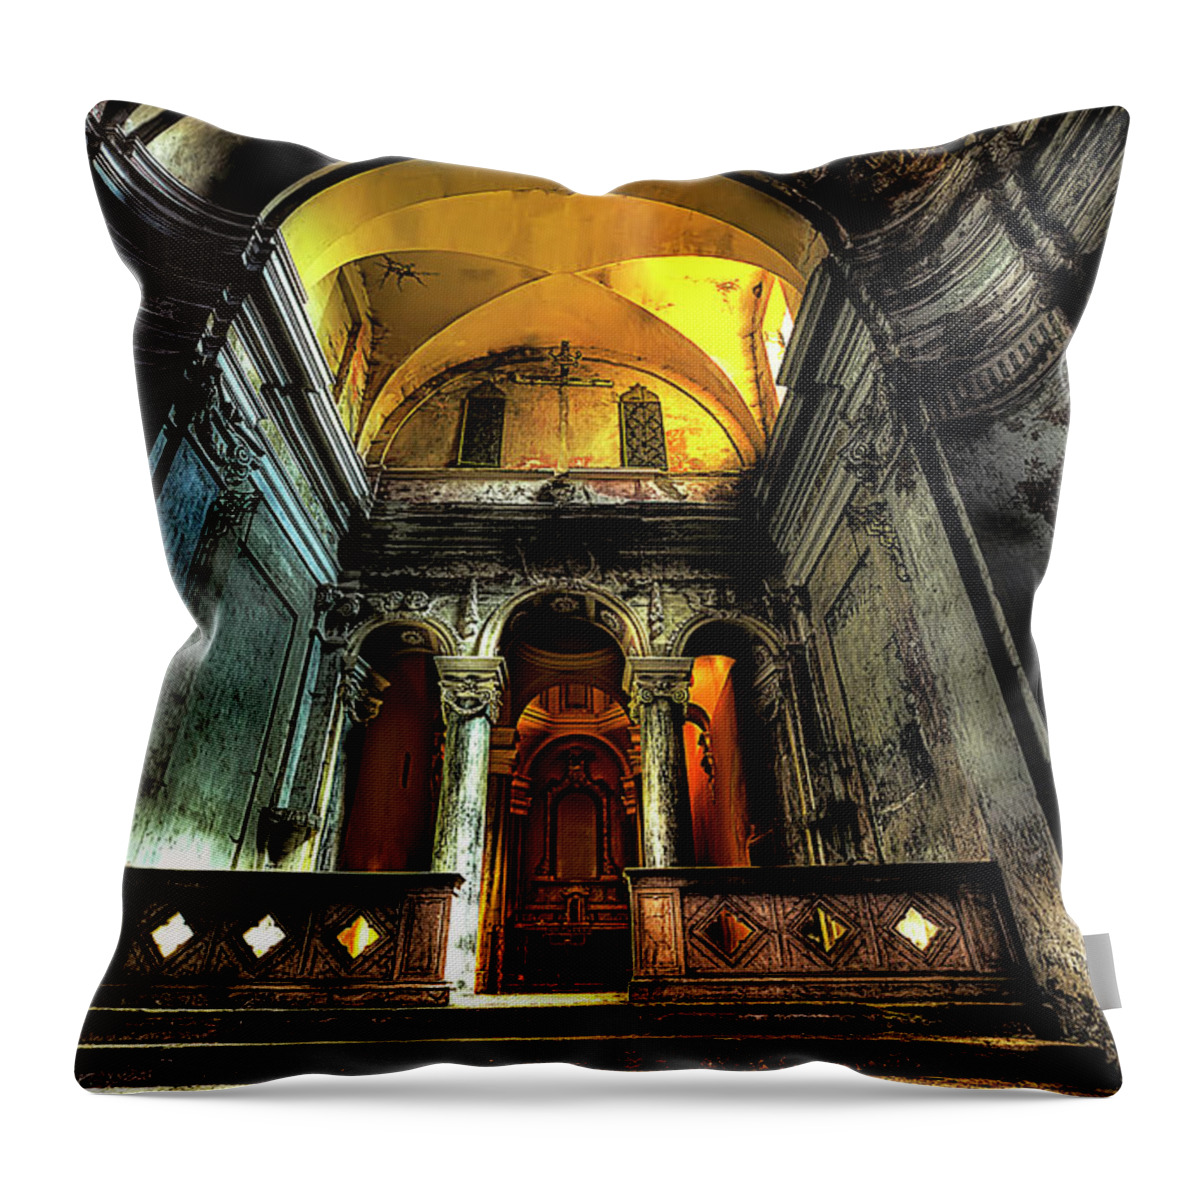 Chiesa Abbandonata Throw Pillow featuring the photograph THE YELLOW LIGHT CHURCH 1 - La chiesa della luce gialla 1 by Enrico Pelos